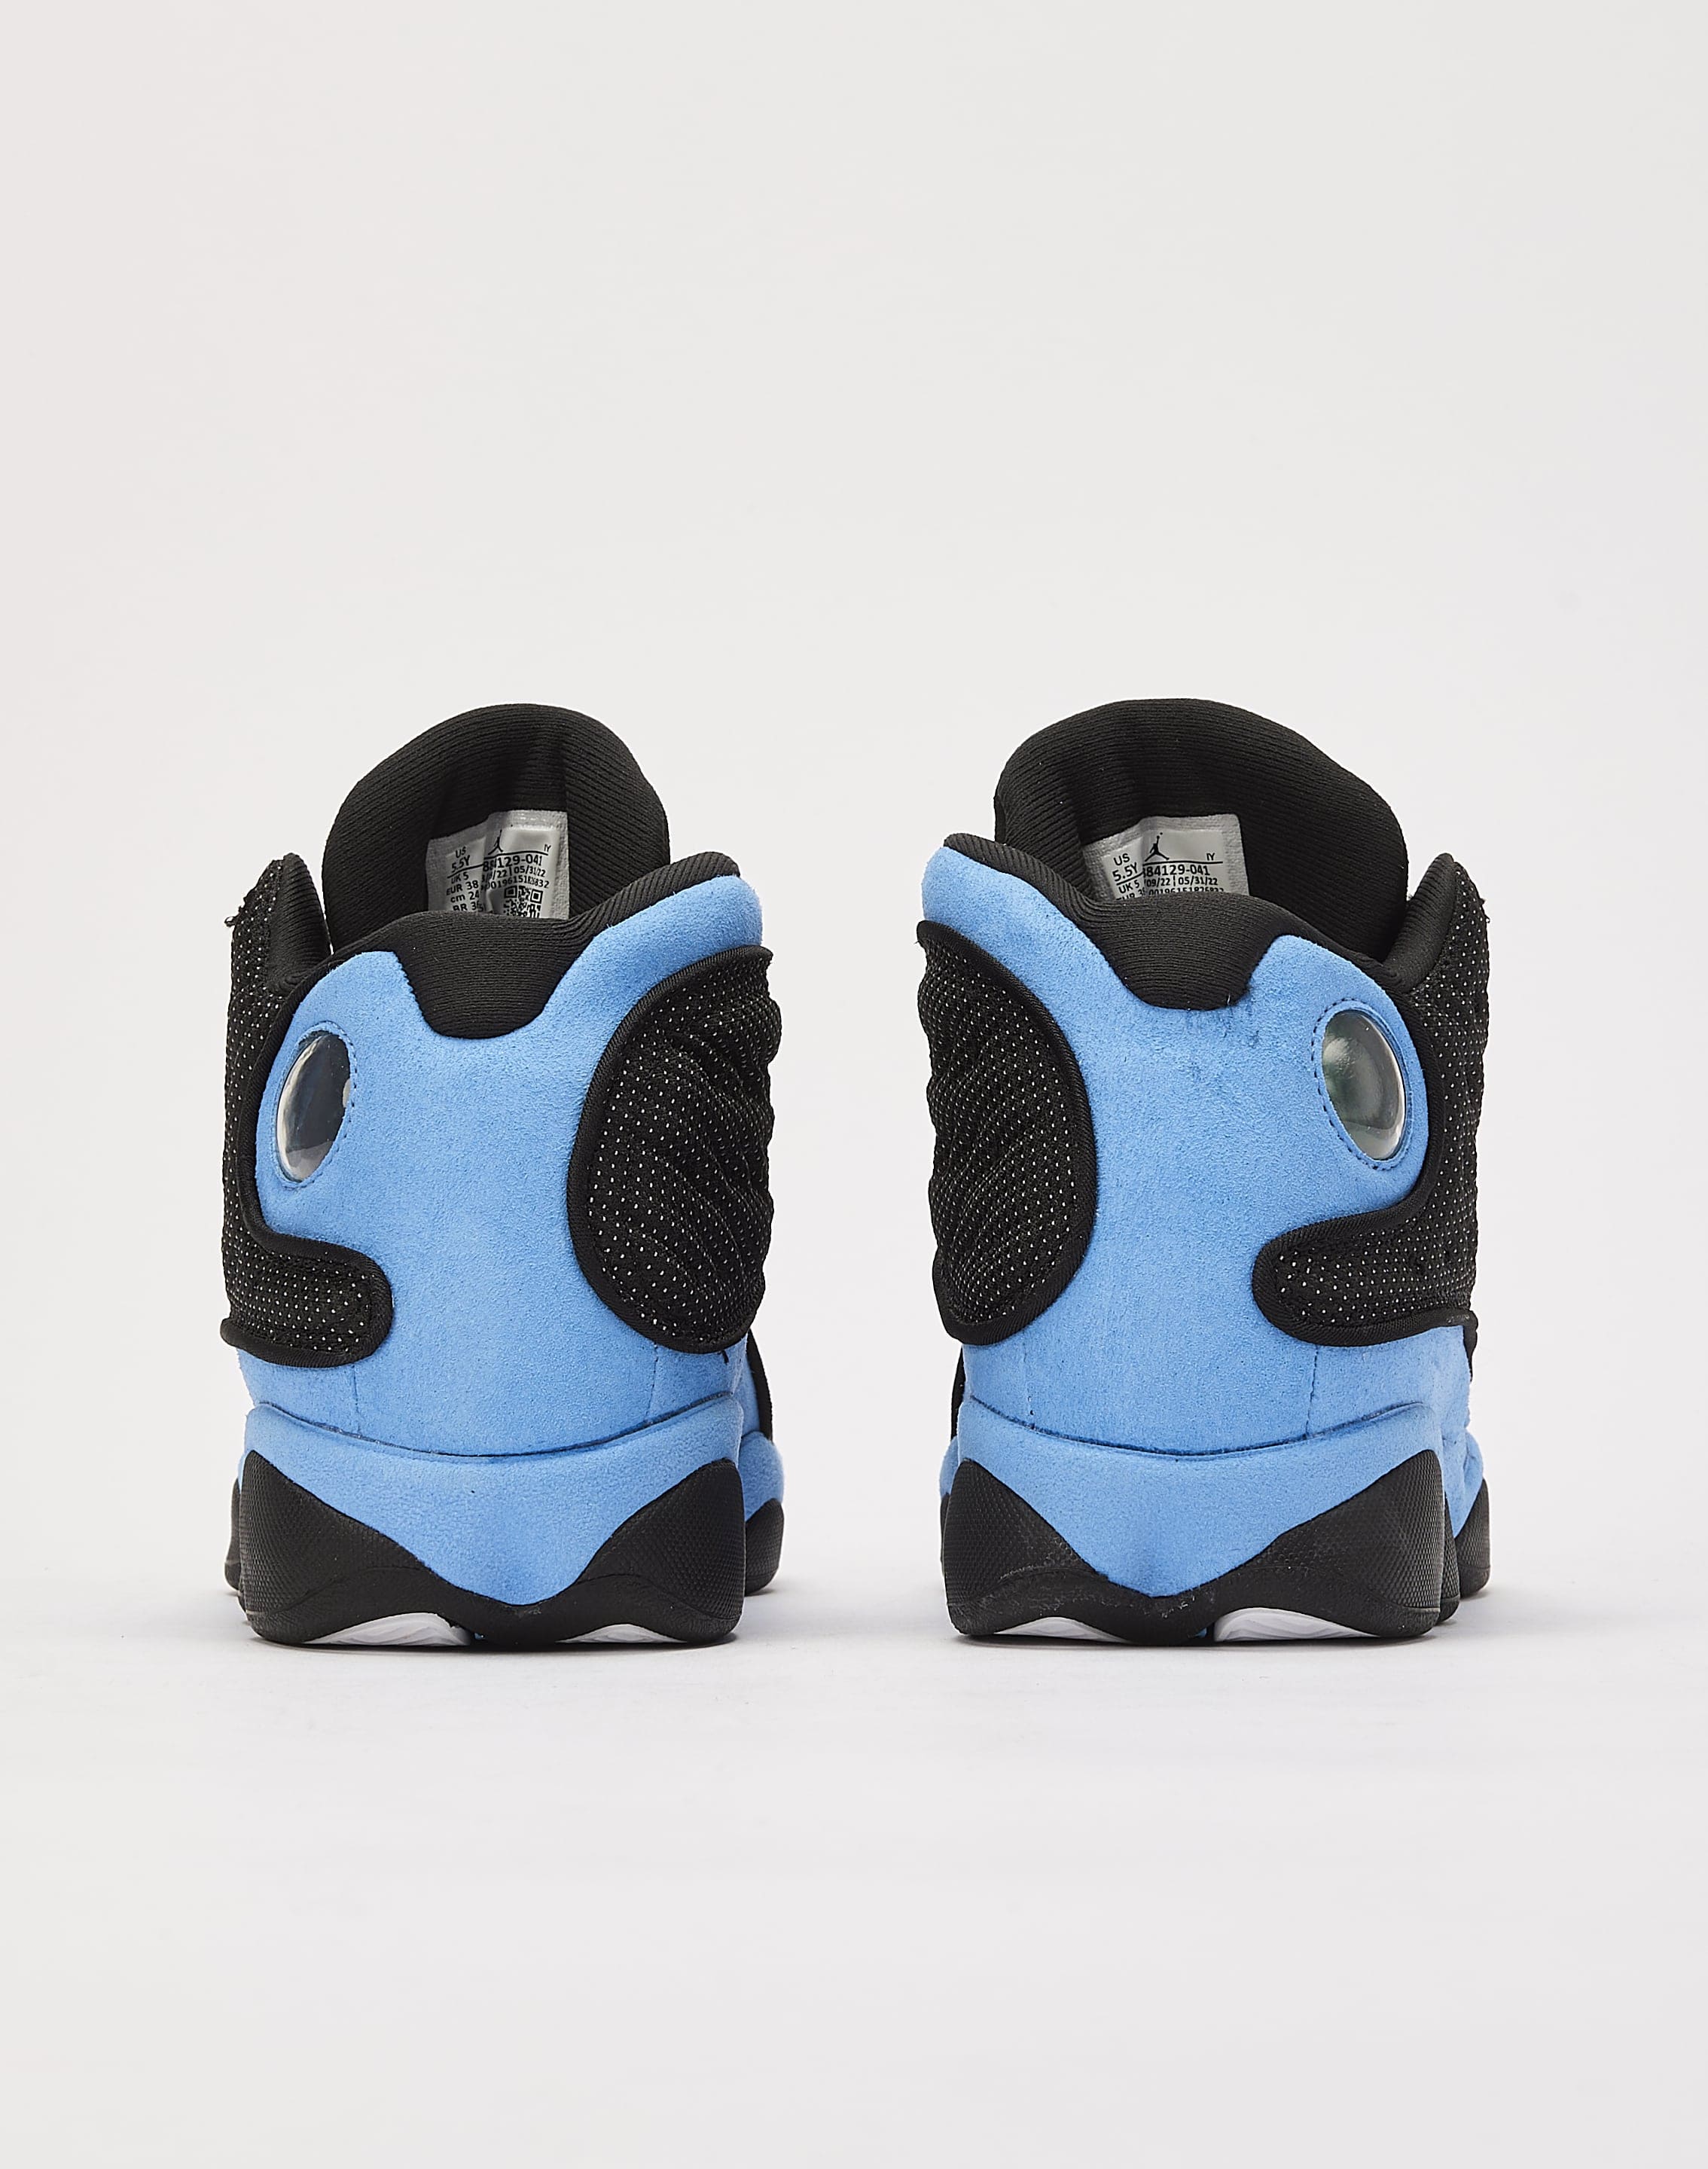 Air Jordan 13 Retro Shoe